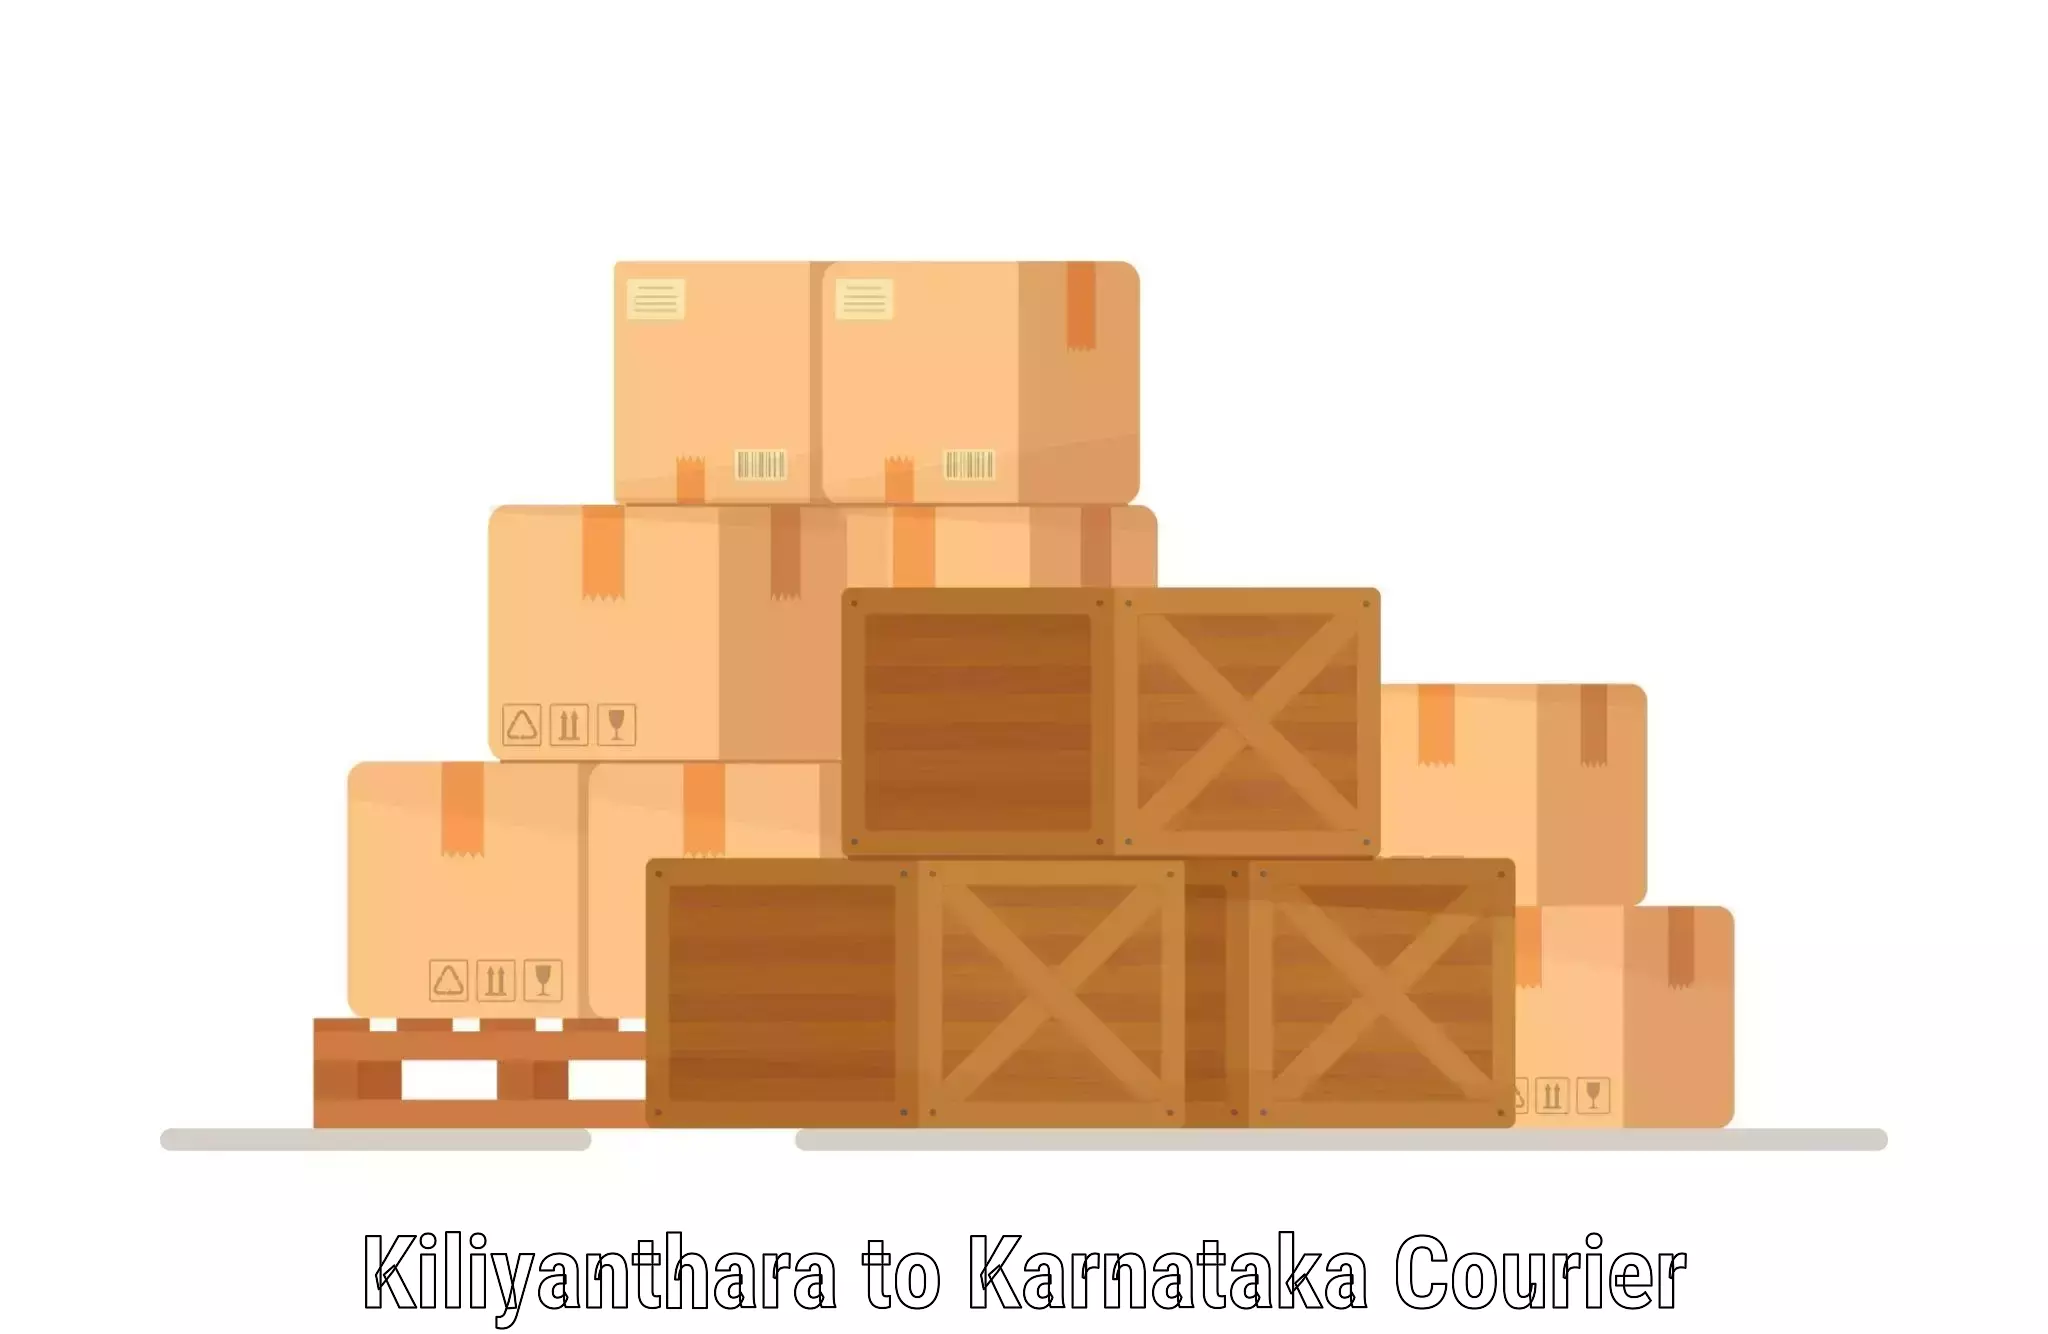 Nationwide delivery network Kiliyanthara to Mudhol